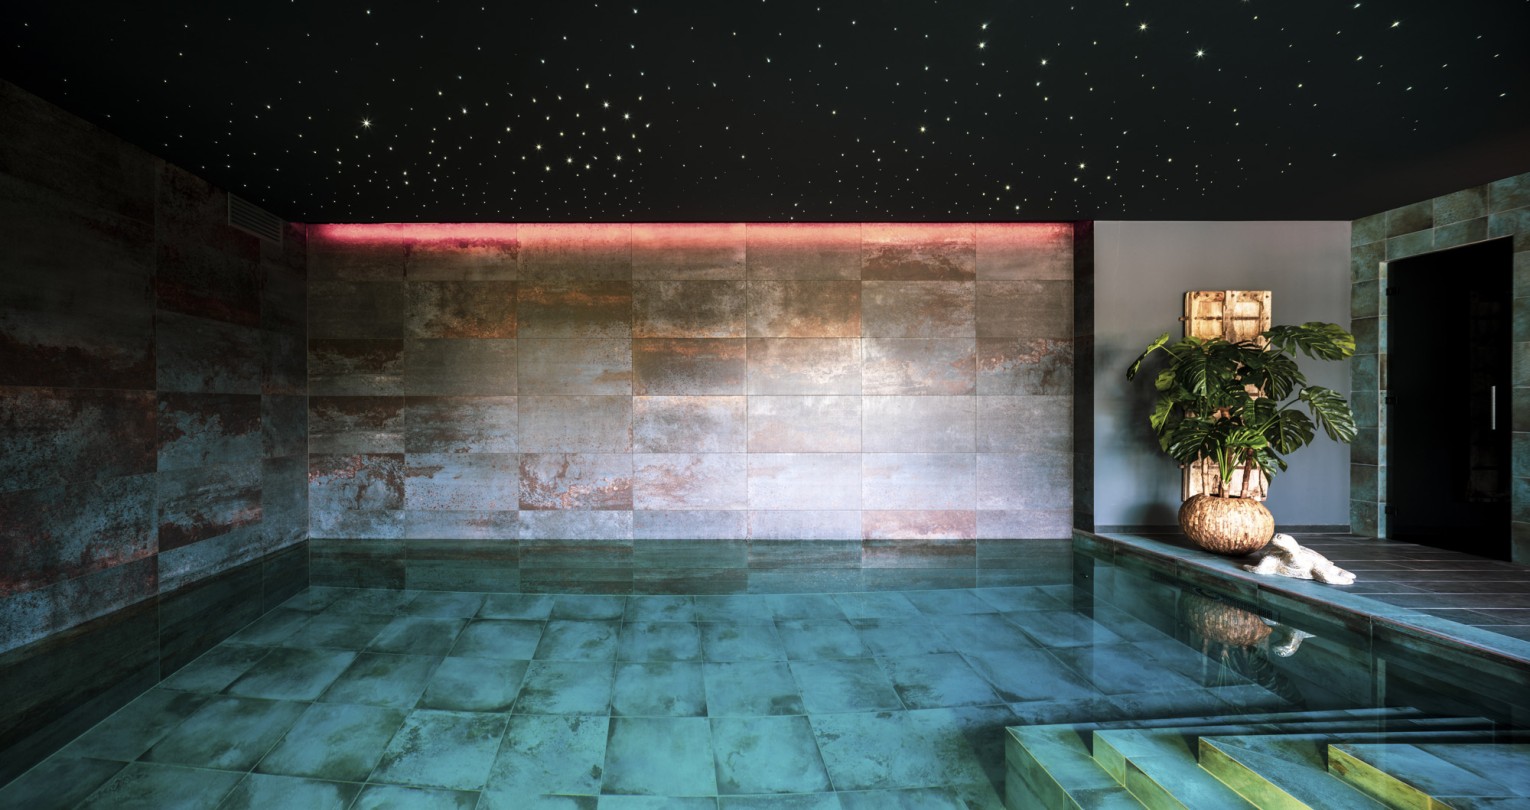 Waterstijl | Betegeld binnenbad met sterrenhemel